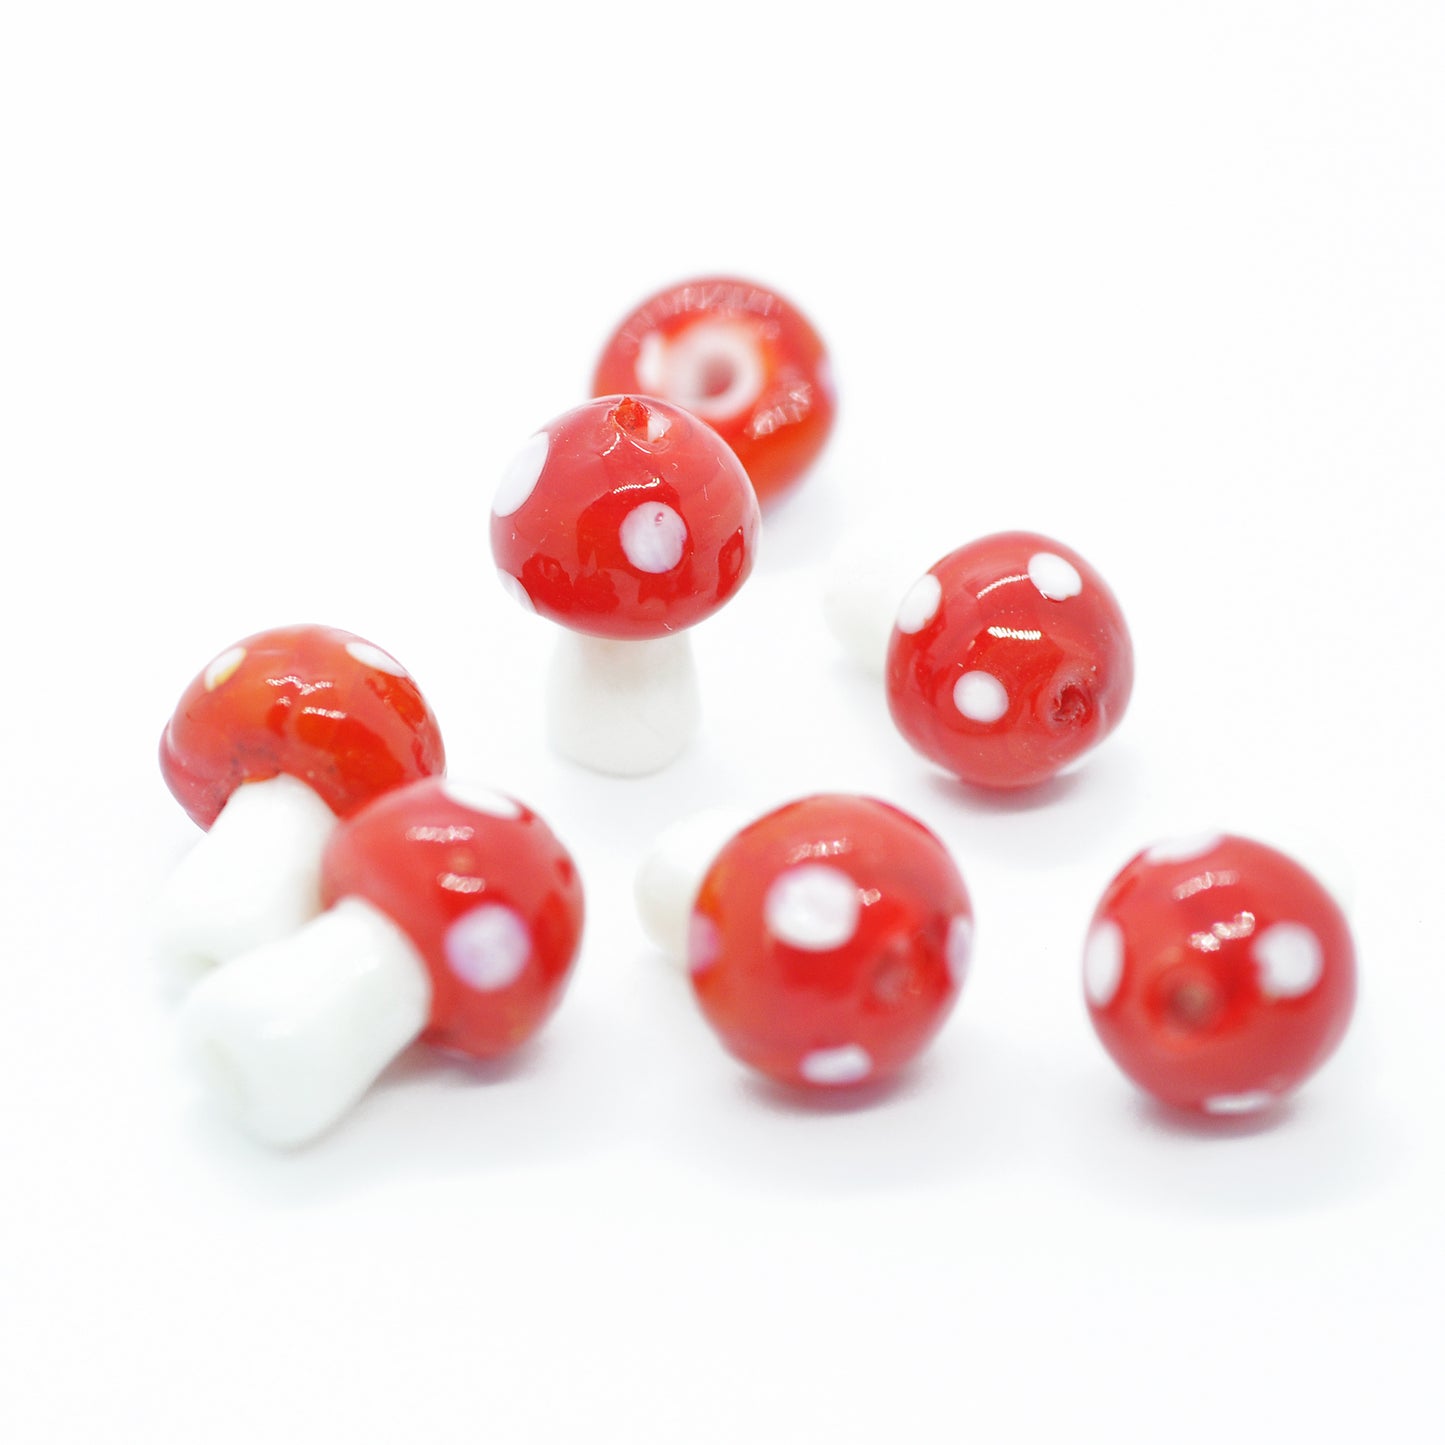 Toadstool / mushroom glass / red white / 17mm